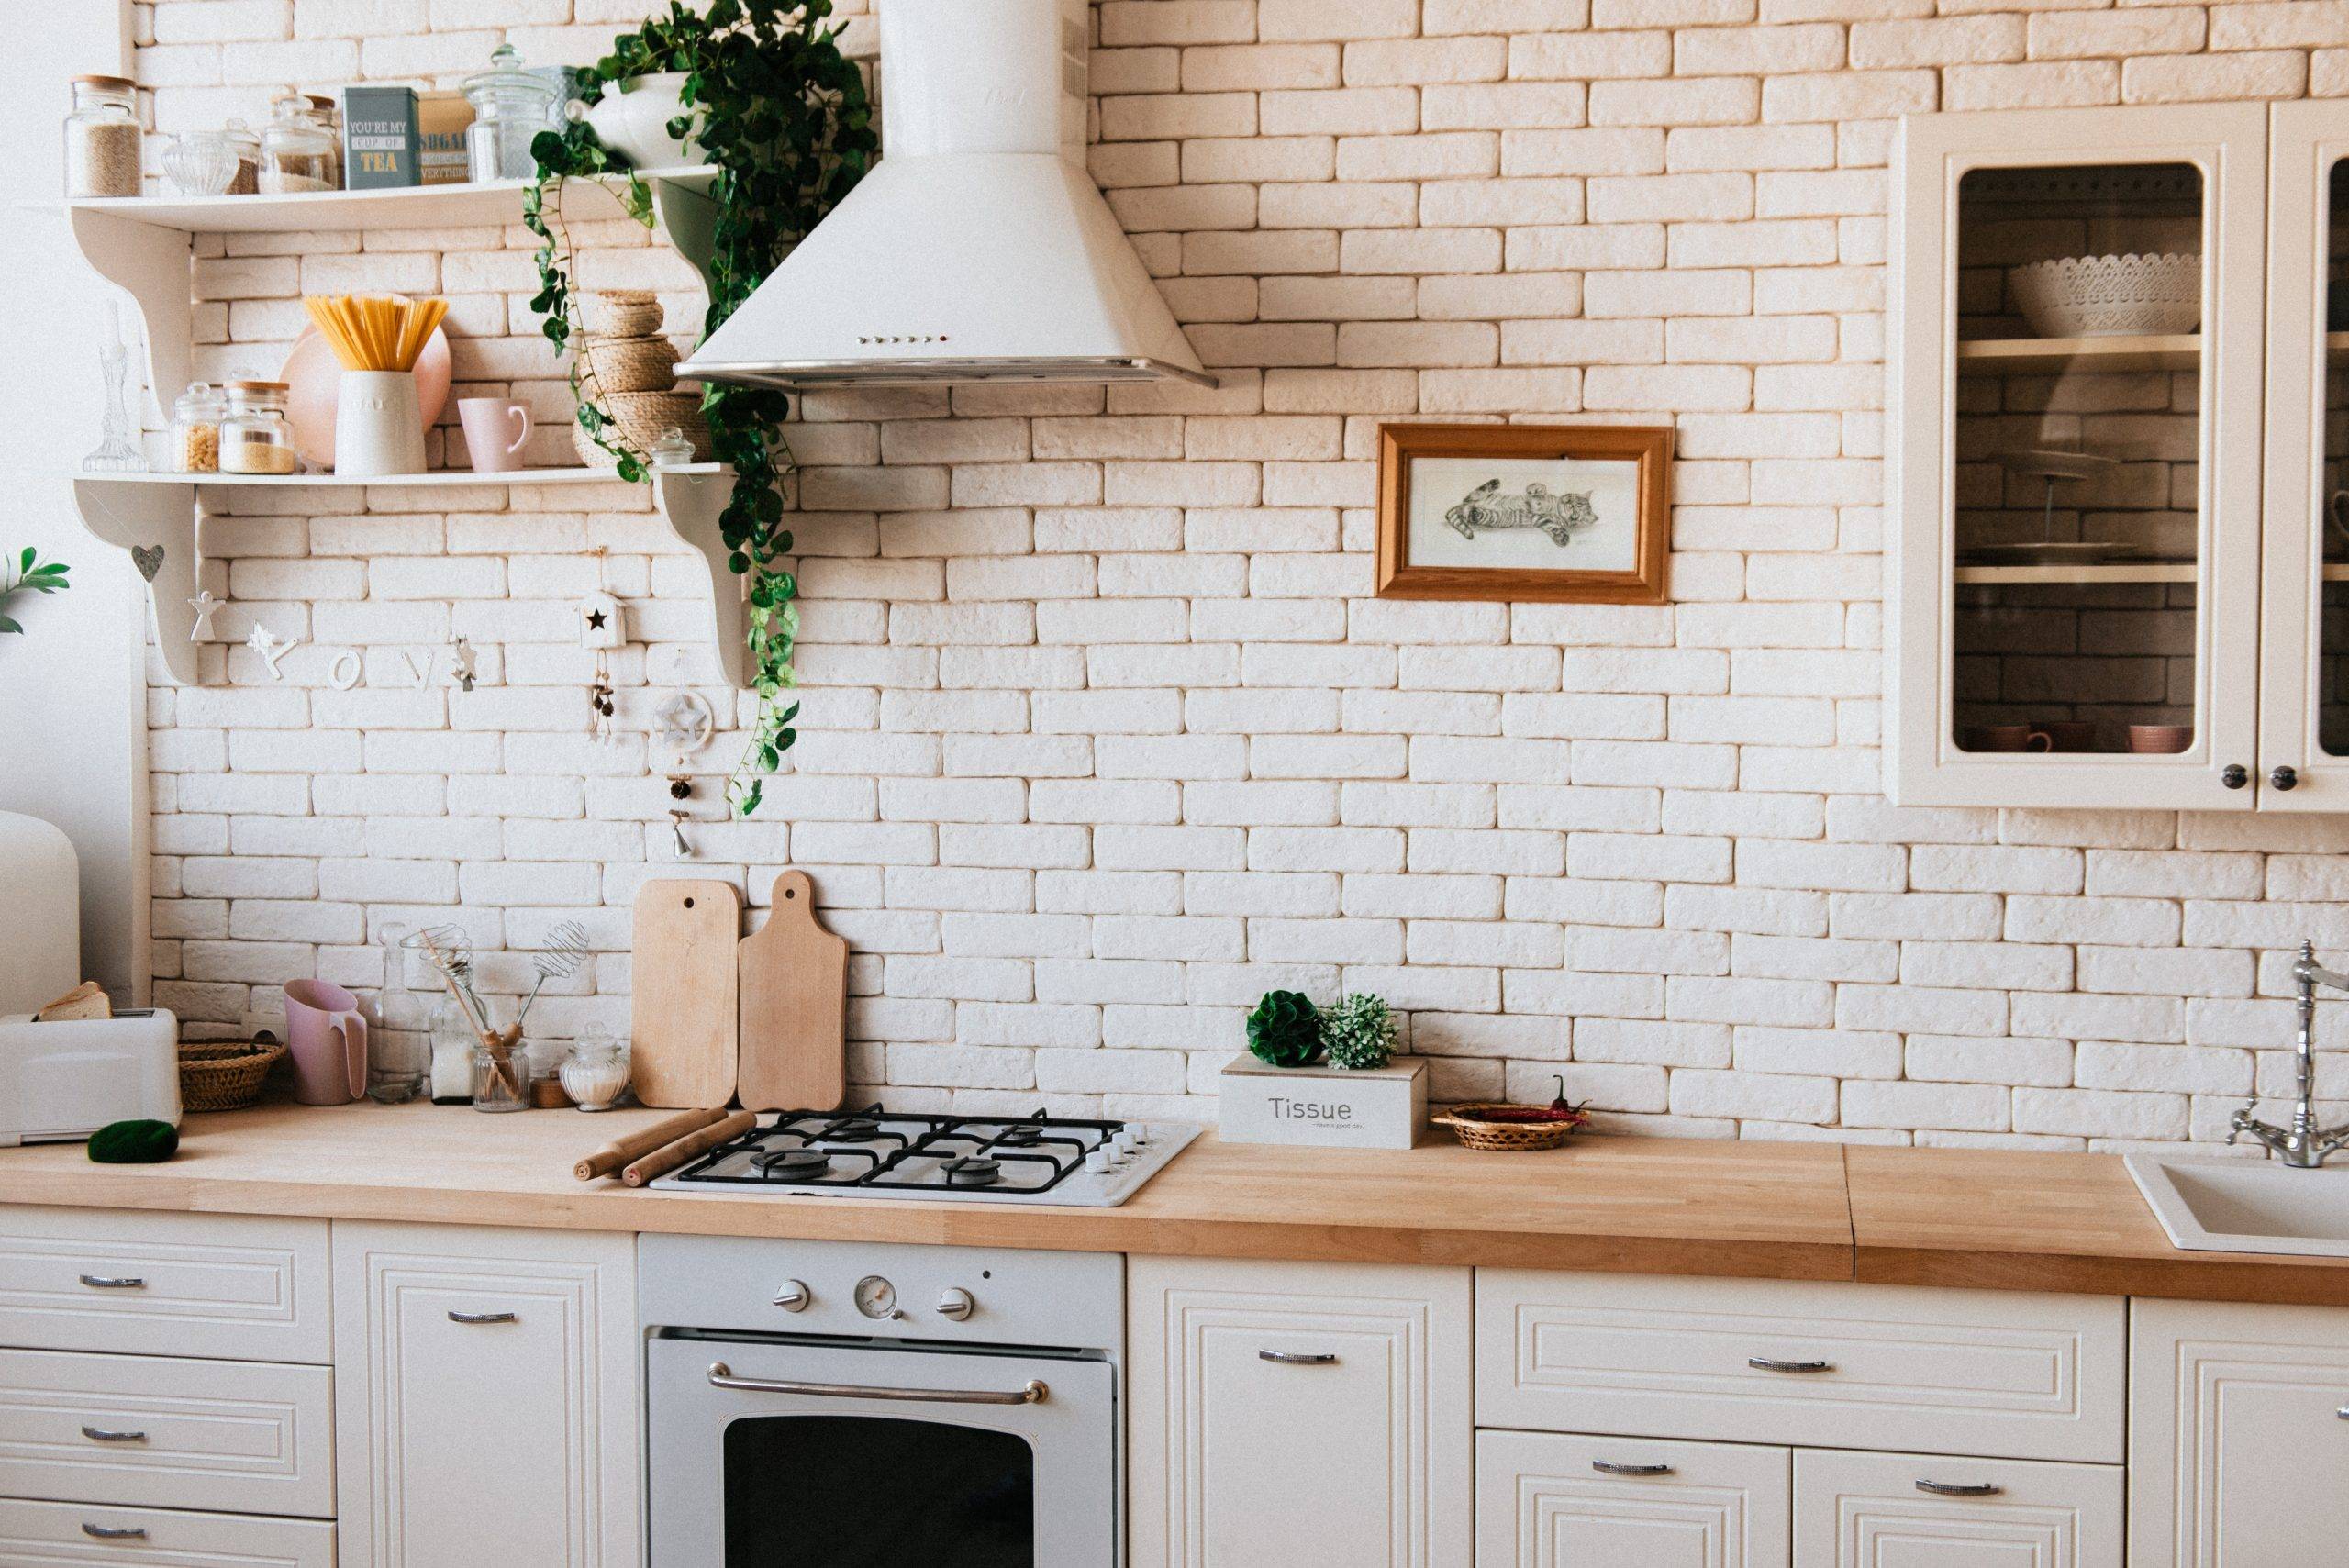 Charming Cottage Kitchen Ideas [18 Dreamy Design Inspirations]